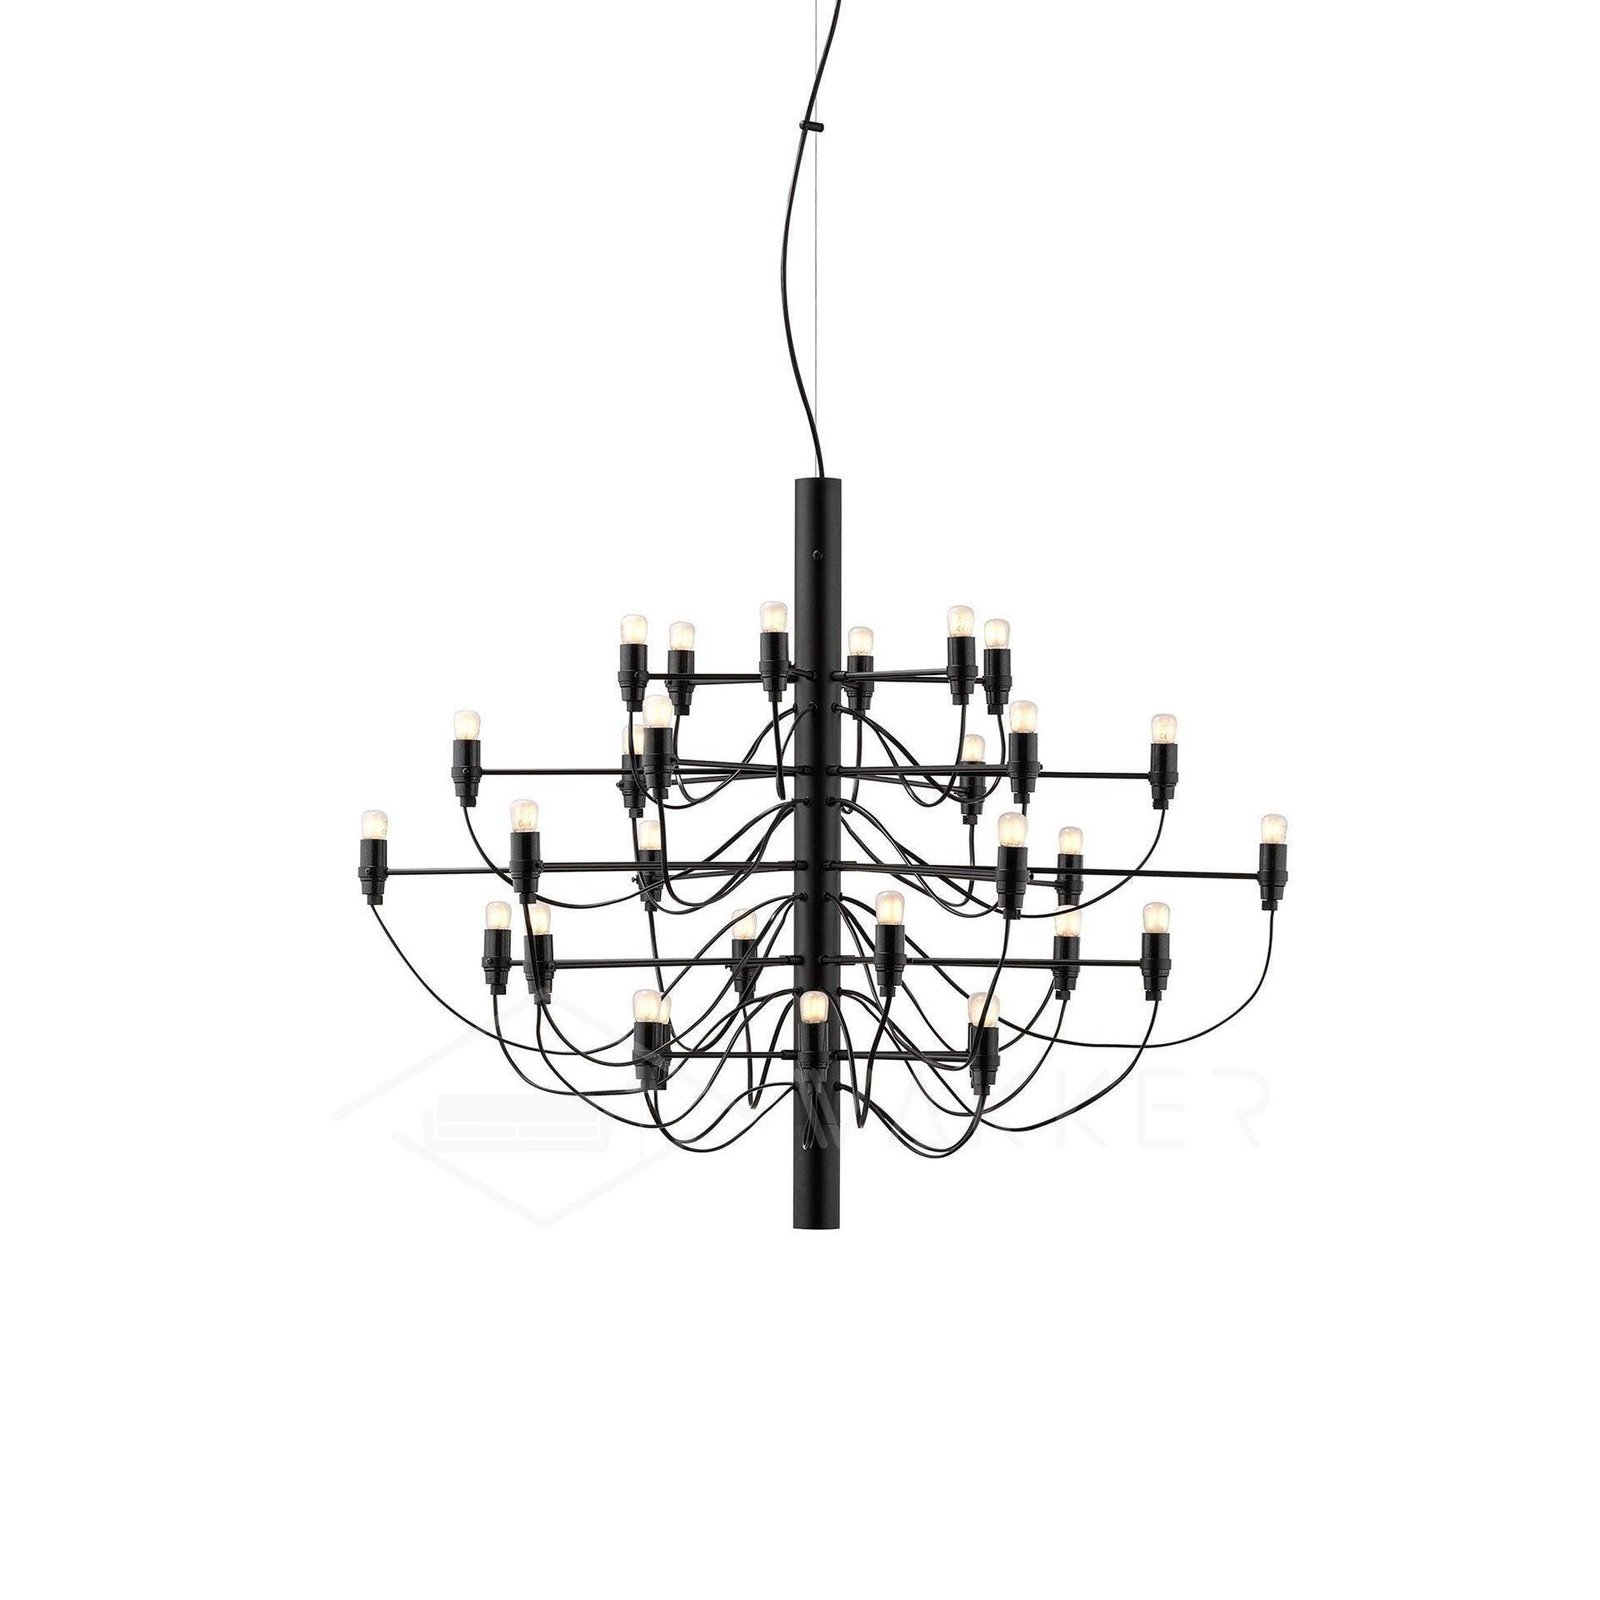 Black 2097 Suspension Lamp with 30 Heads: Diameter 31.5 inches x Height 23.6 inches, or Diameter 80cm x Height 60cm